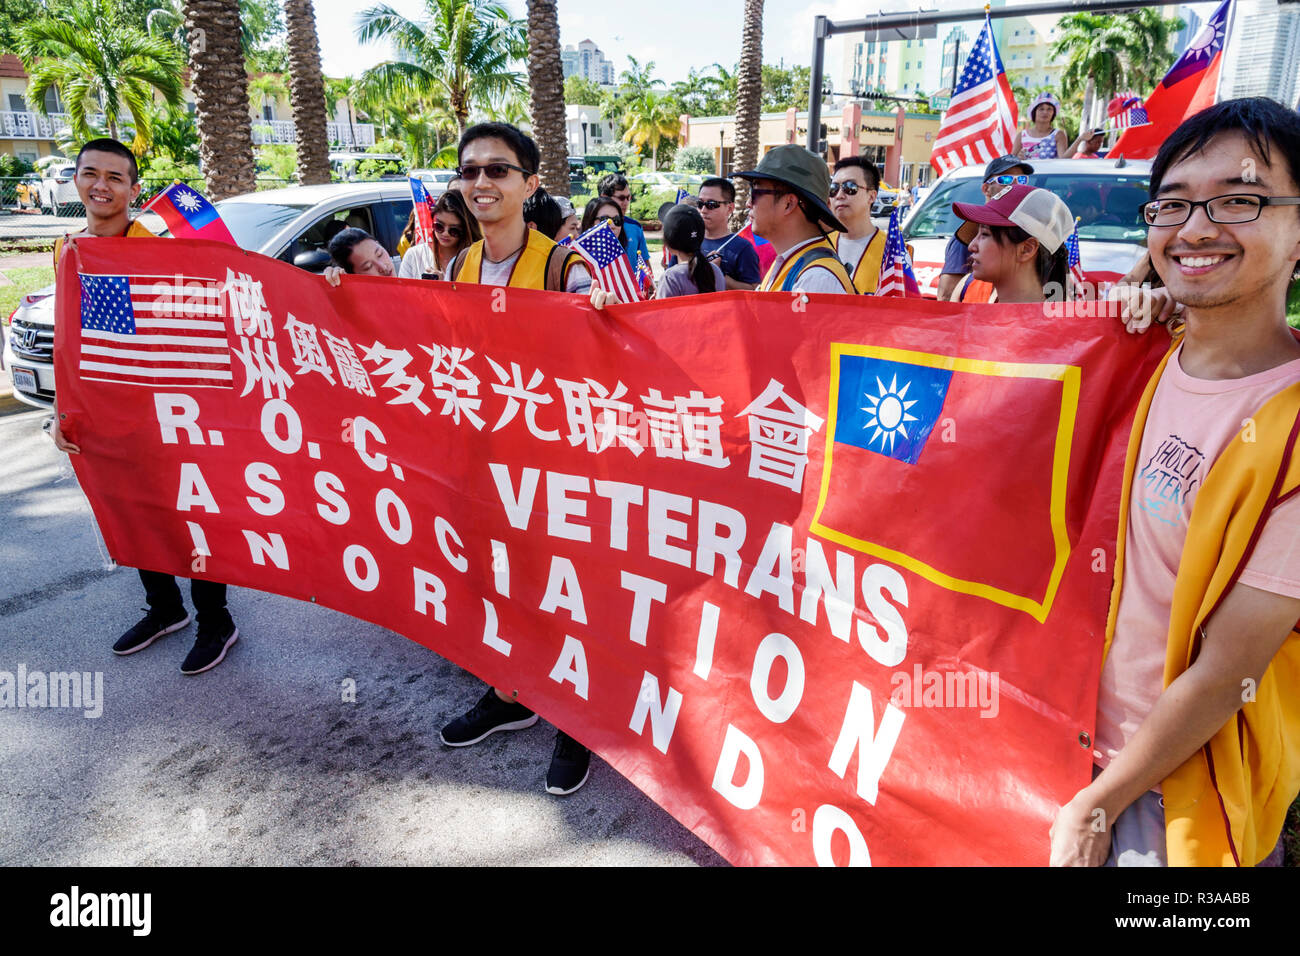 Miami Beach Florida,Ocean Drive,Veterans Day Parade activities,ROC Republic China Association,Taiwanese,Asian man men male,marching banner,FL181115039 Stock Photo